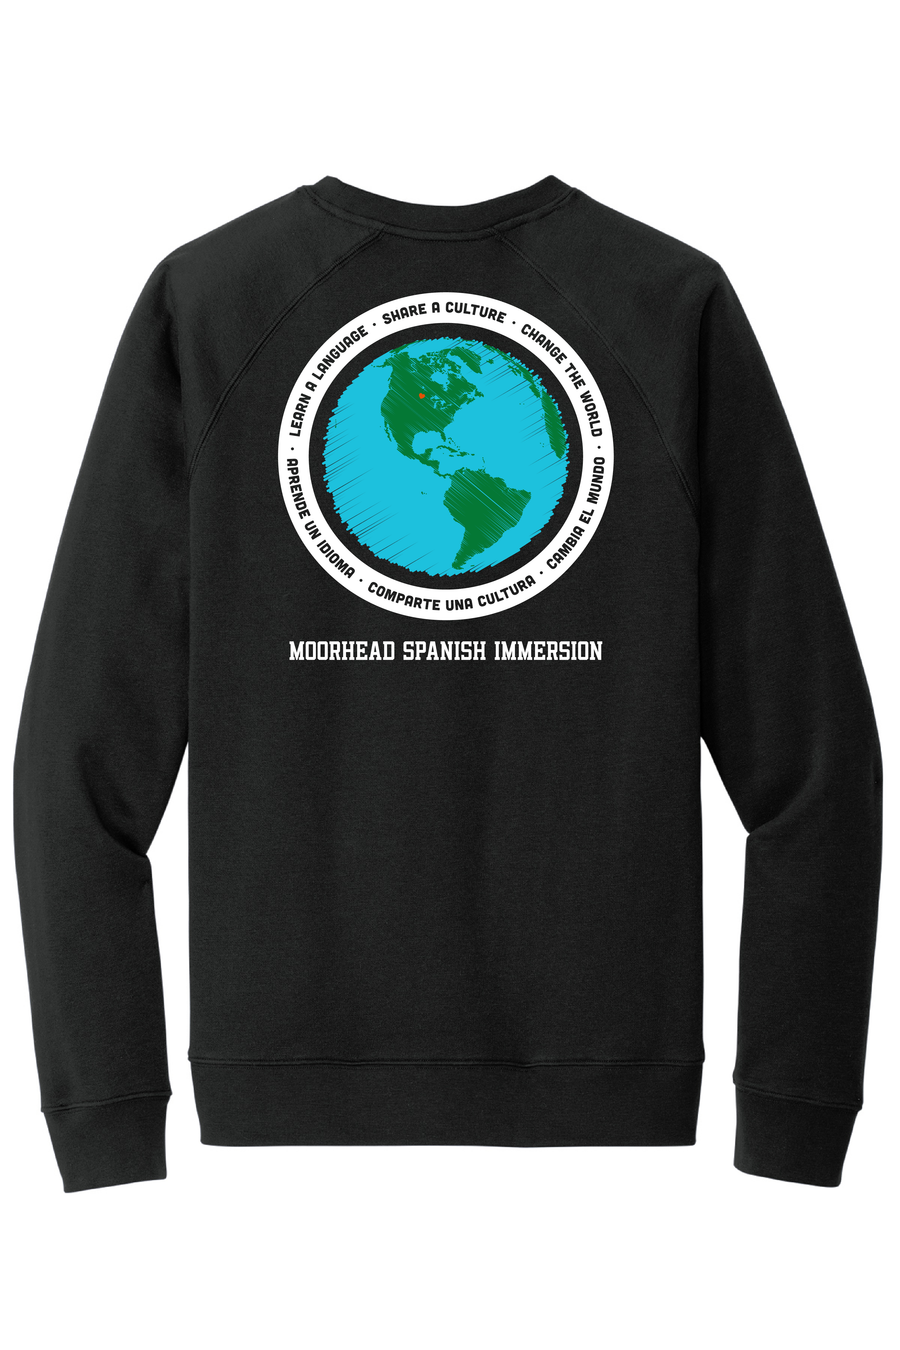 Moorhead Spanish Immersion SportTek Adult Crewneck Sweatshirt (Preorder)